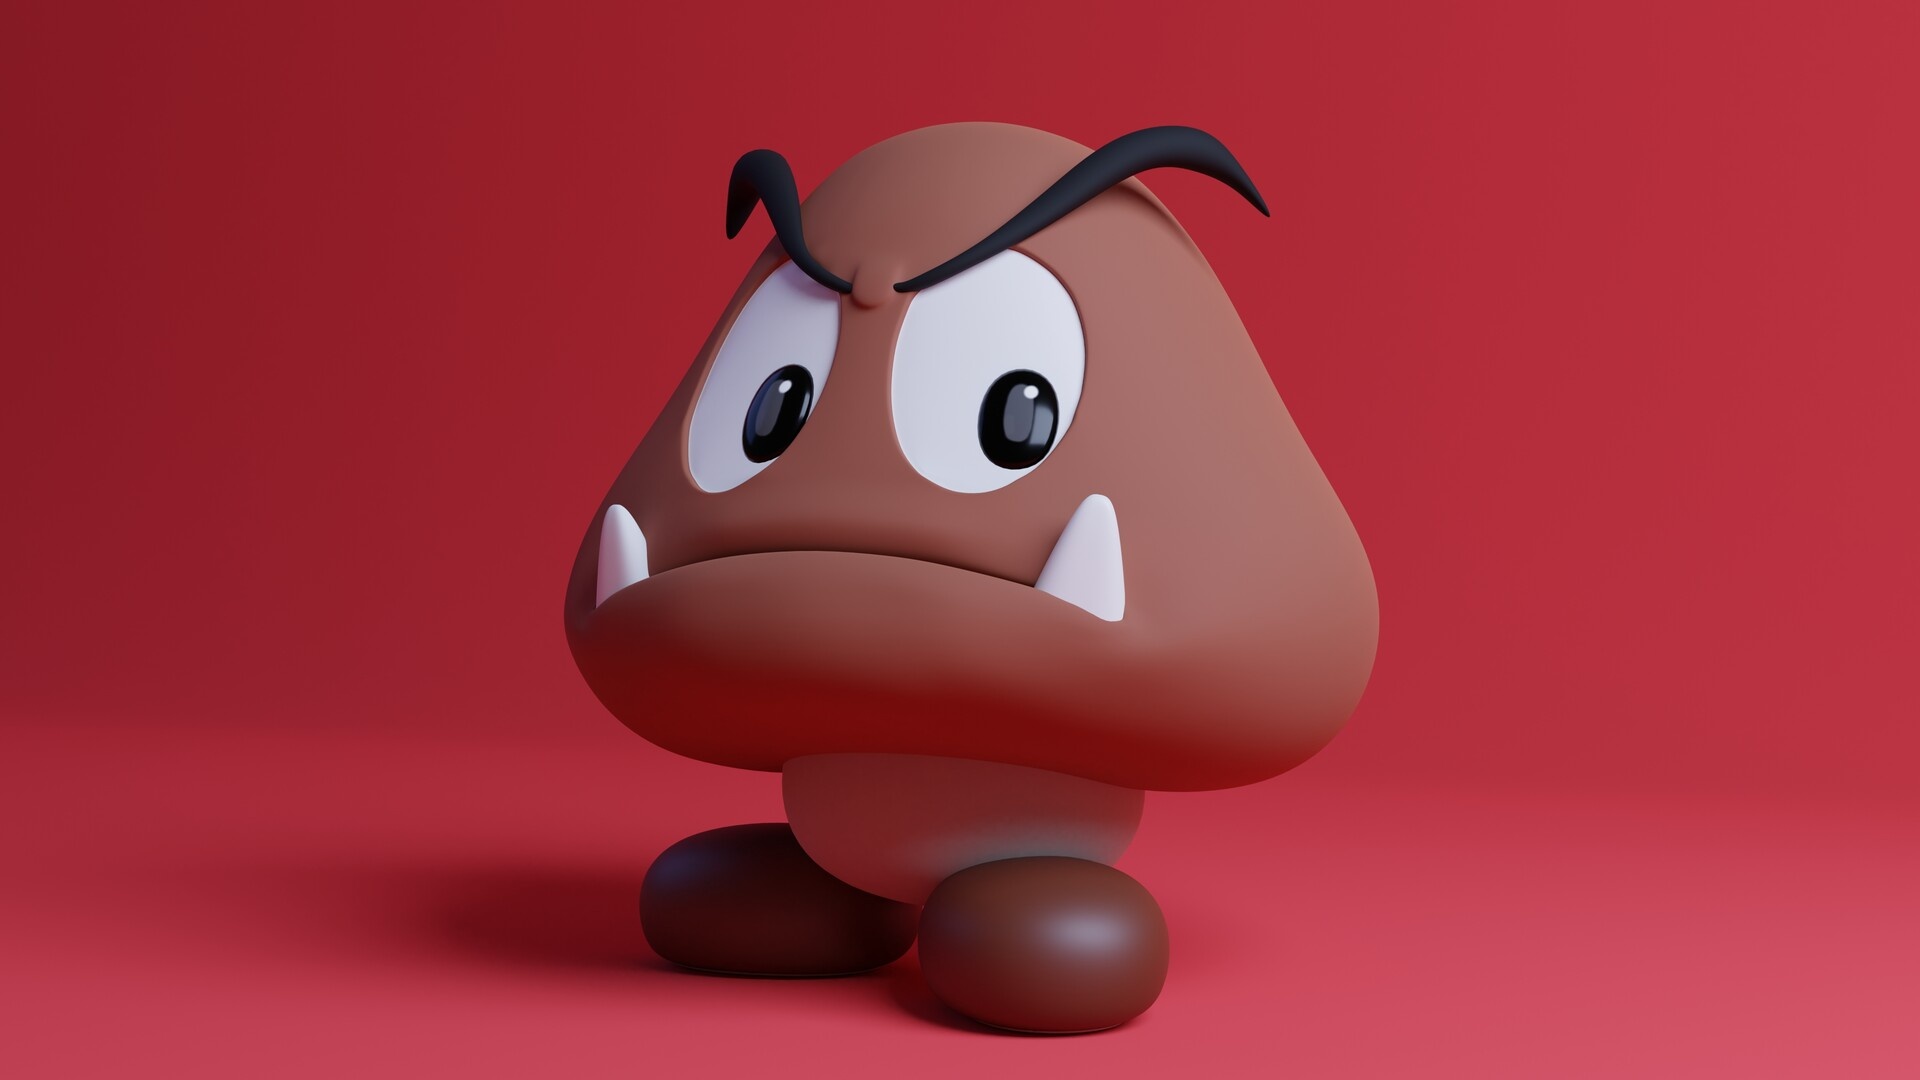 Goomba: Mario's enemy, A small brown mushroom, Nintendo's Mario franchise. 1920x1080 Full HD Background.